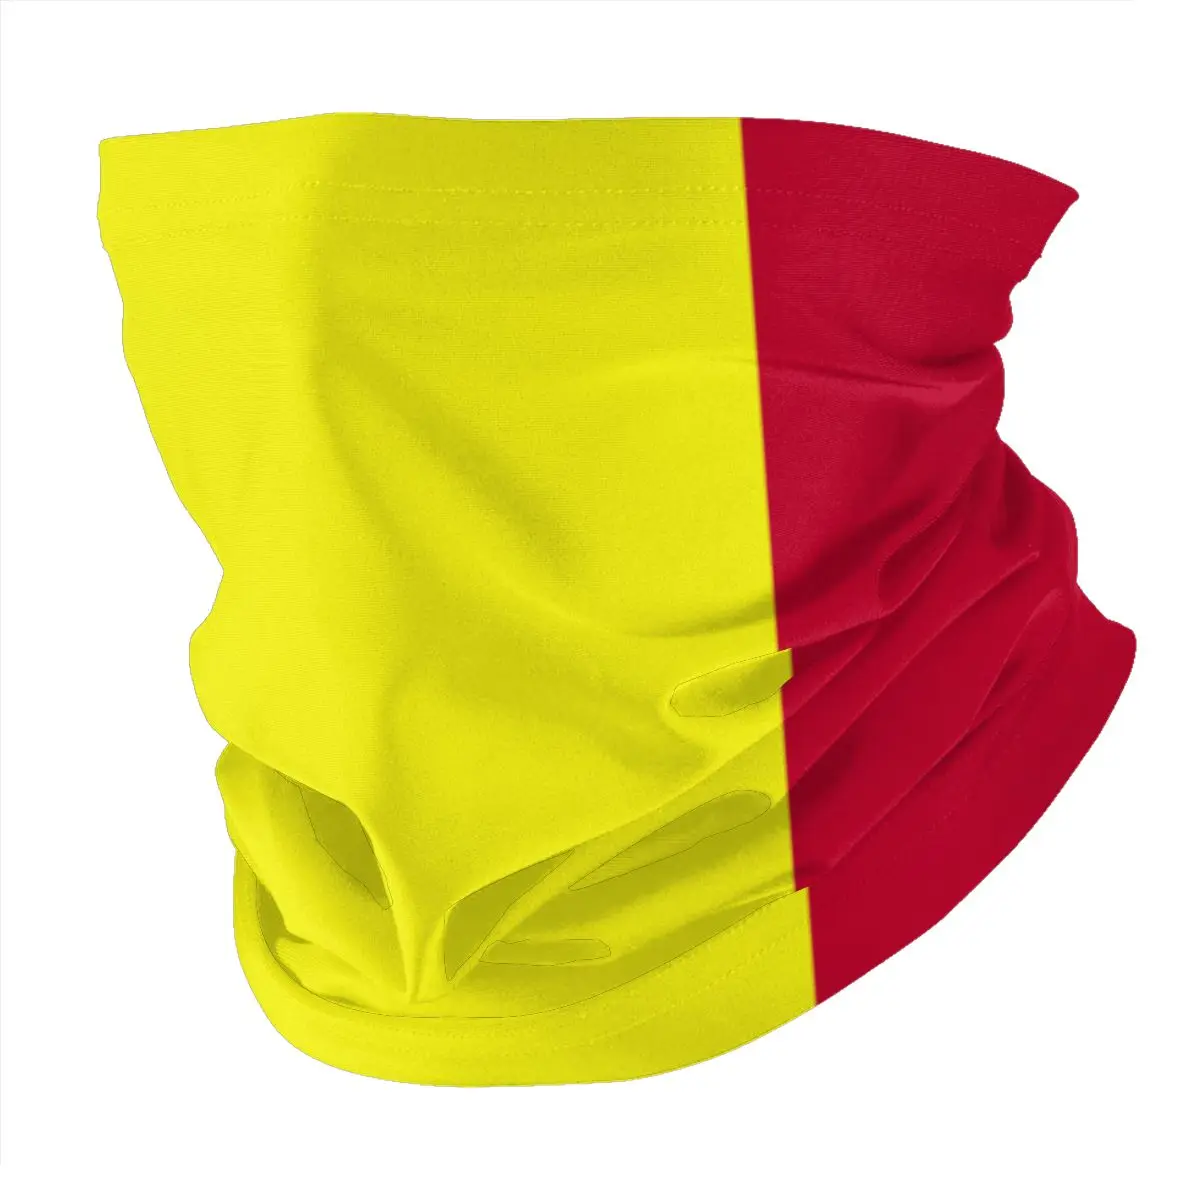 Malí Bandera Cara Bufanda Con 2 Pcs Filtro Multi-propósito Pañuelo en la cabeza la diadema de caballo máscara 2